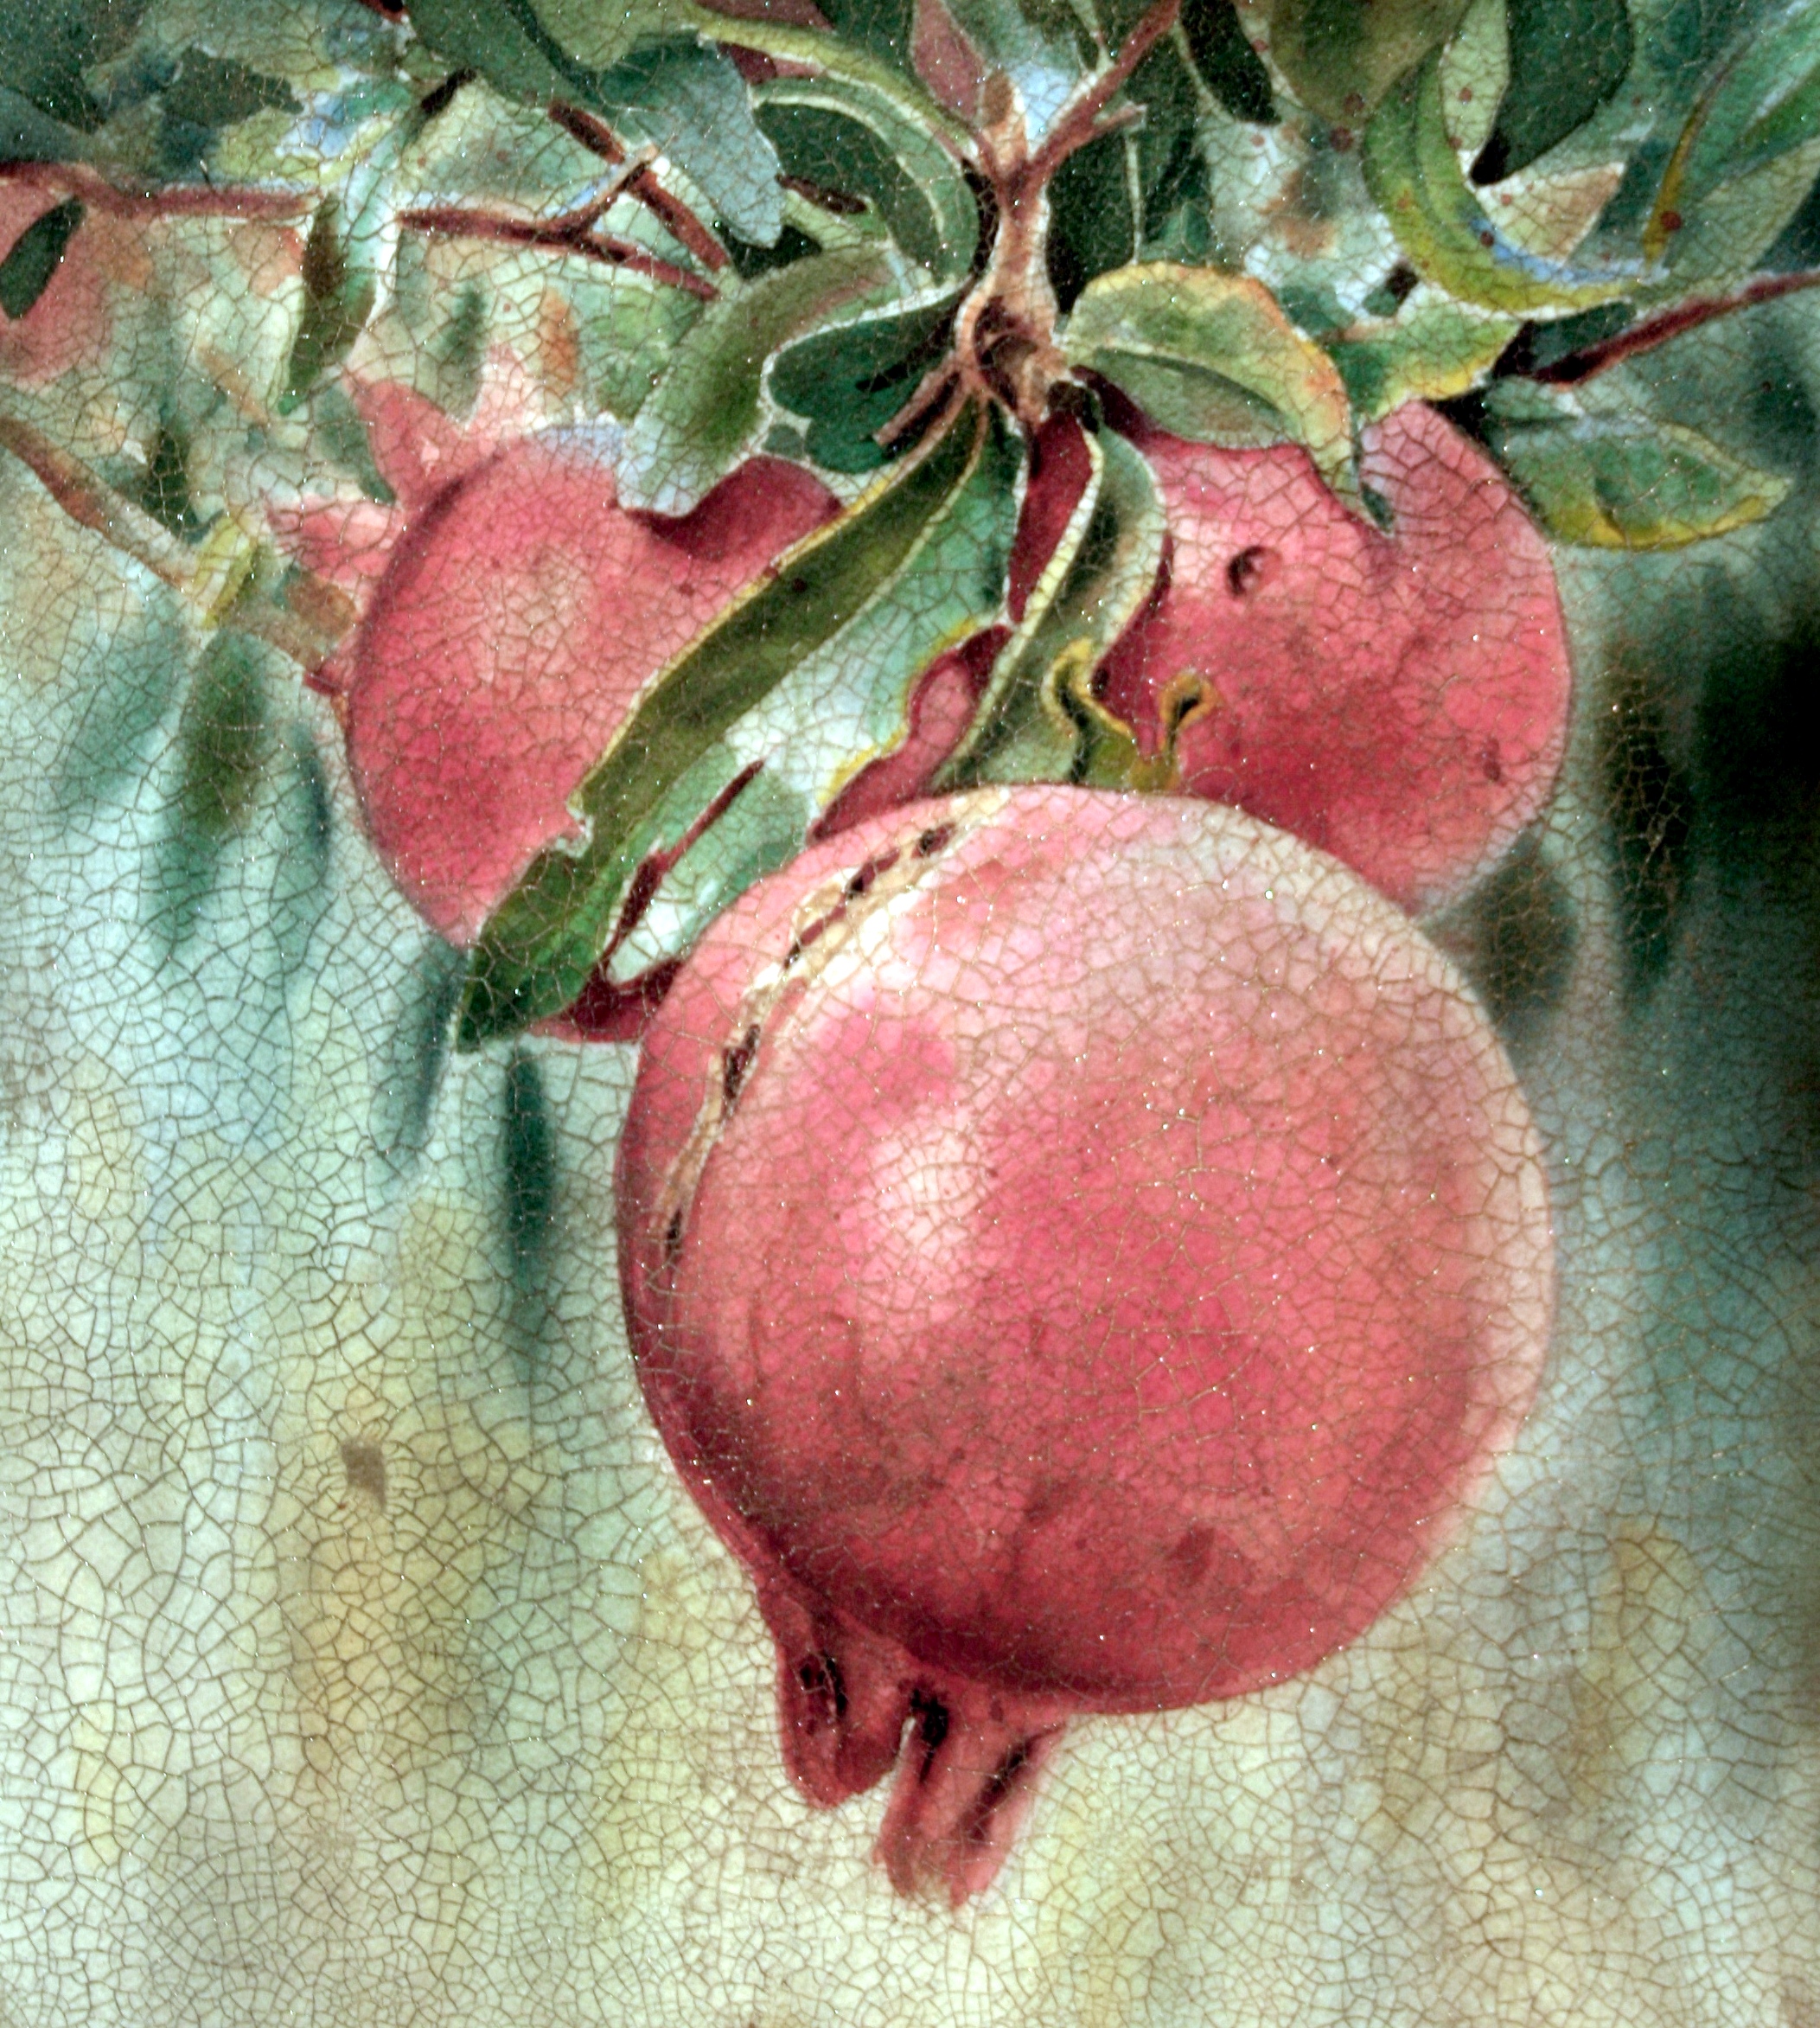 Vintage Pomegranate